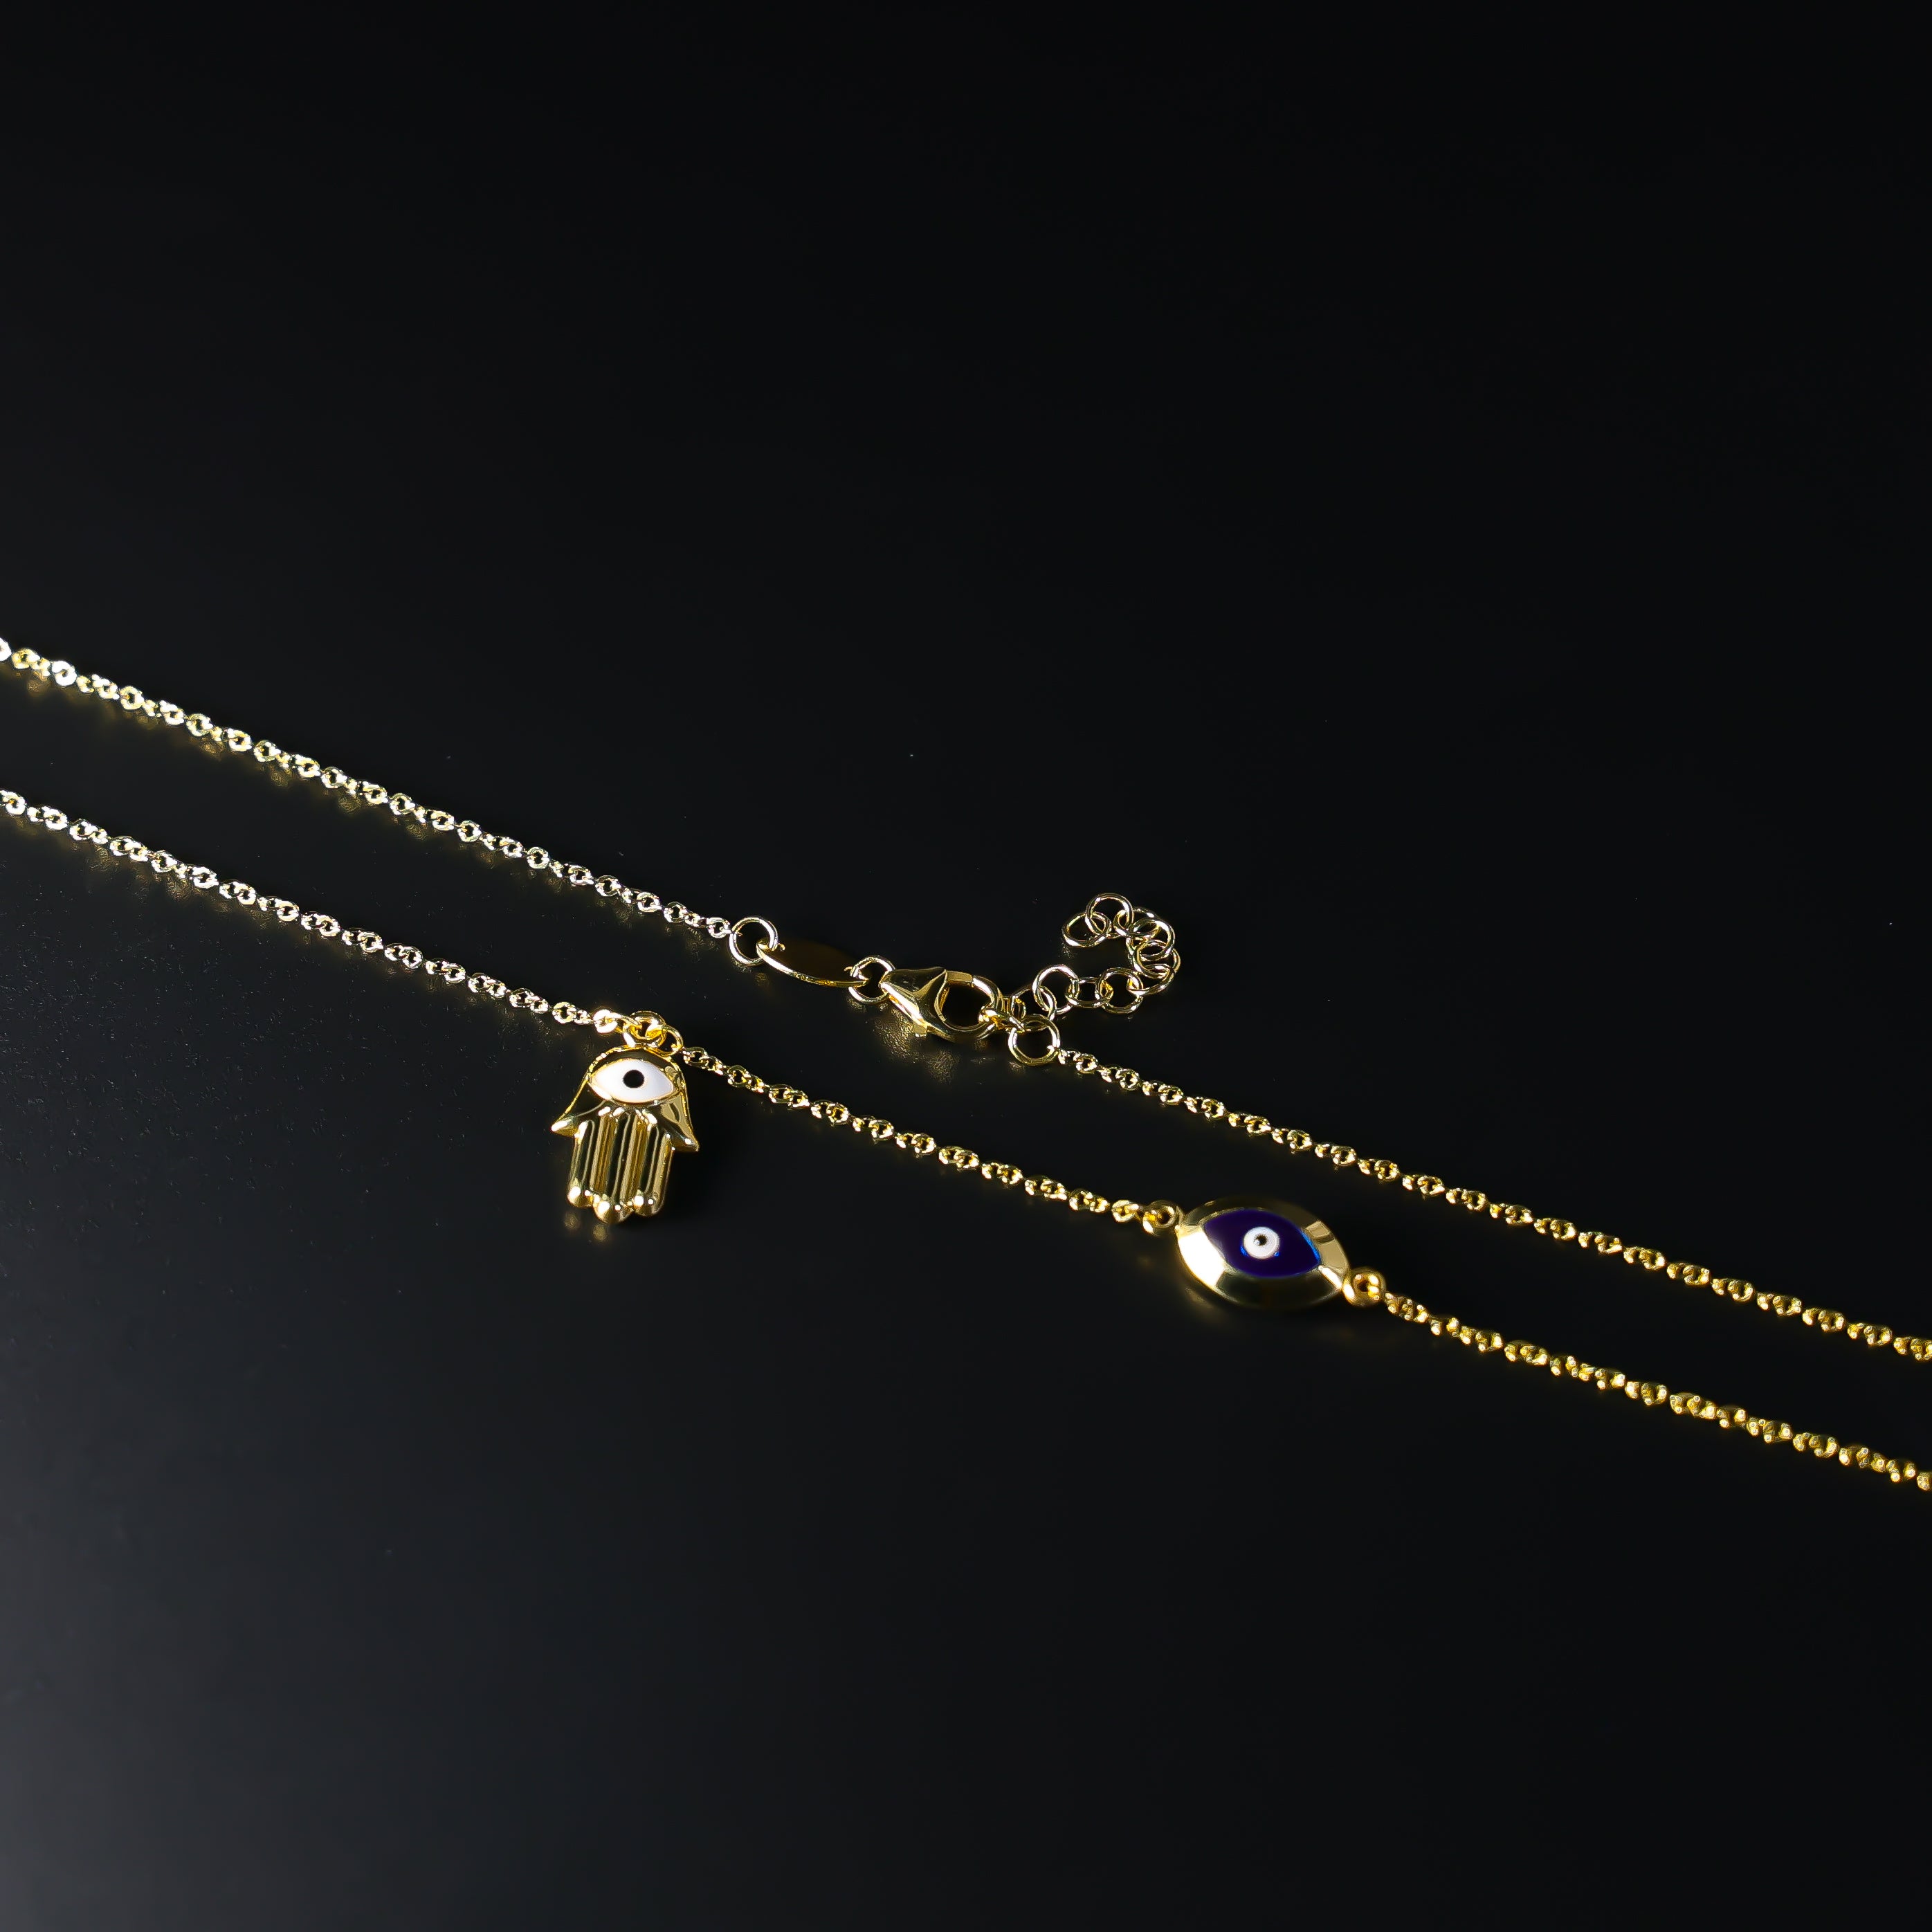 Gold Evil Eye Hamsa Charm Necklace Model-NK0153 - Charlie & Co. Jewelry